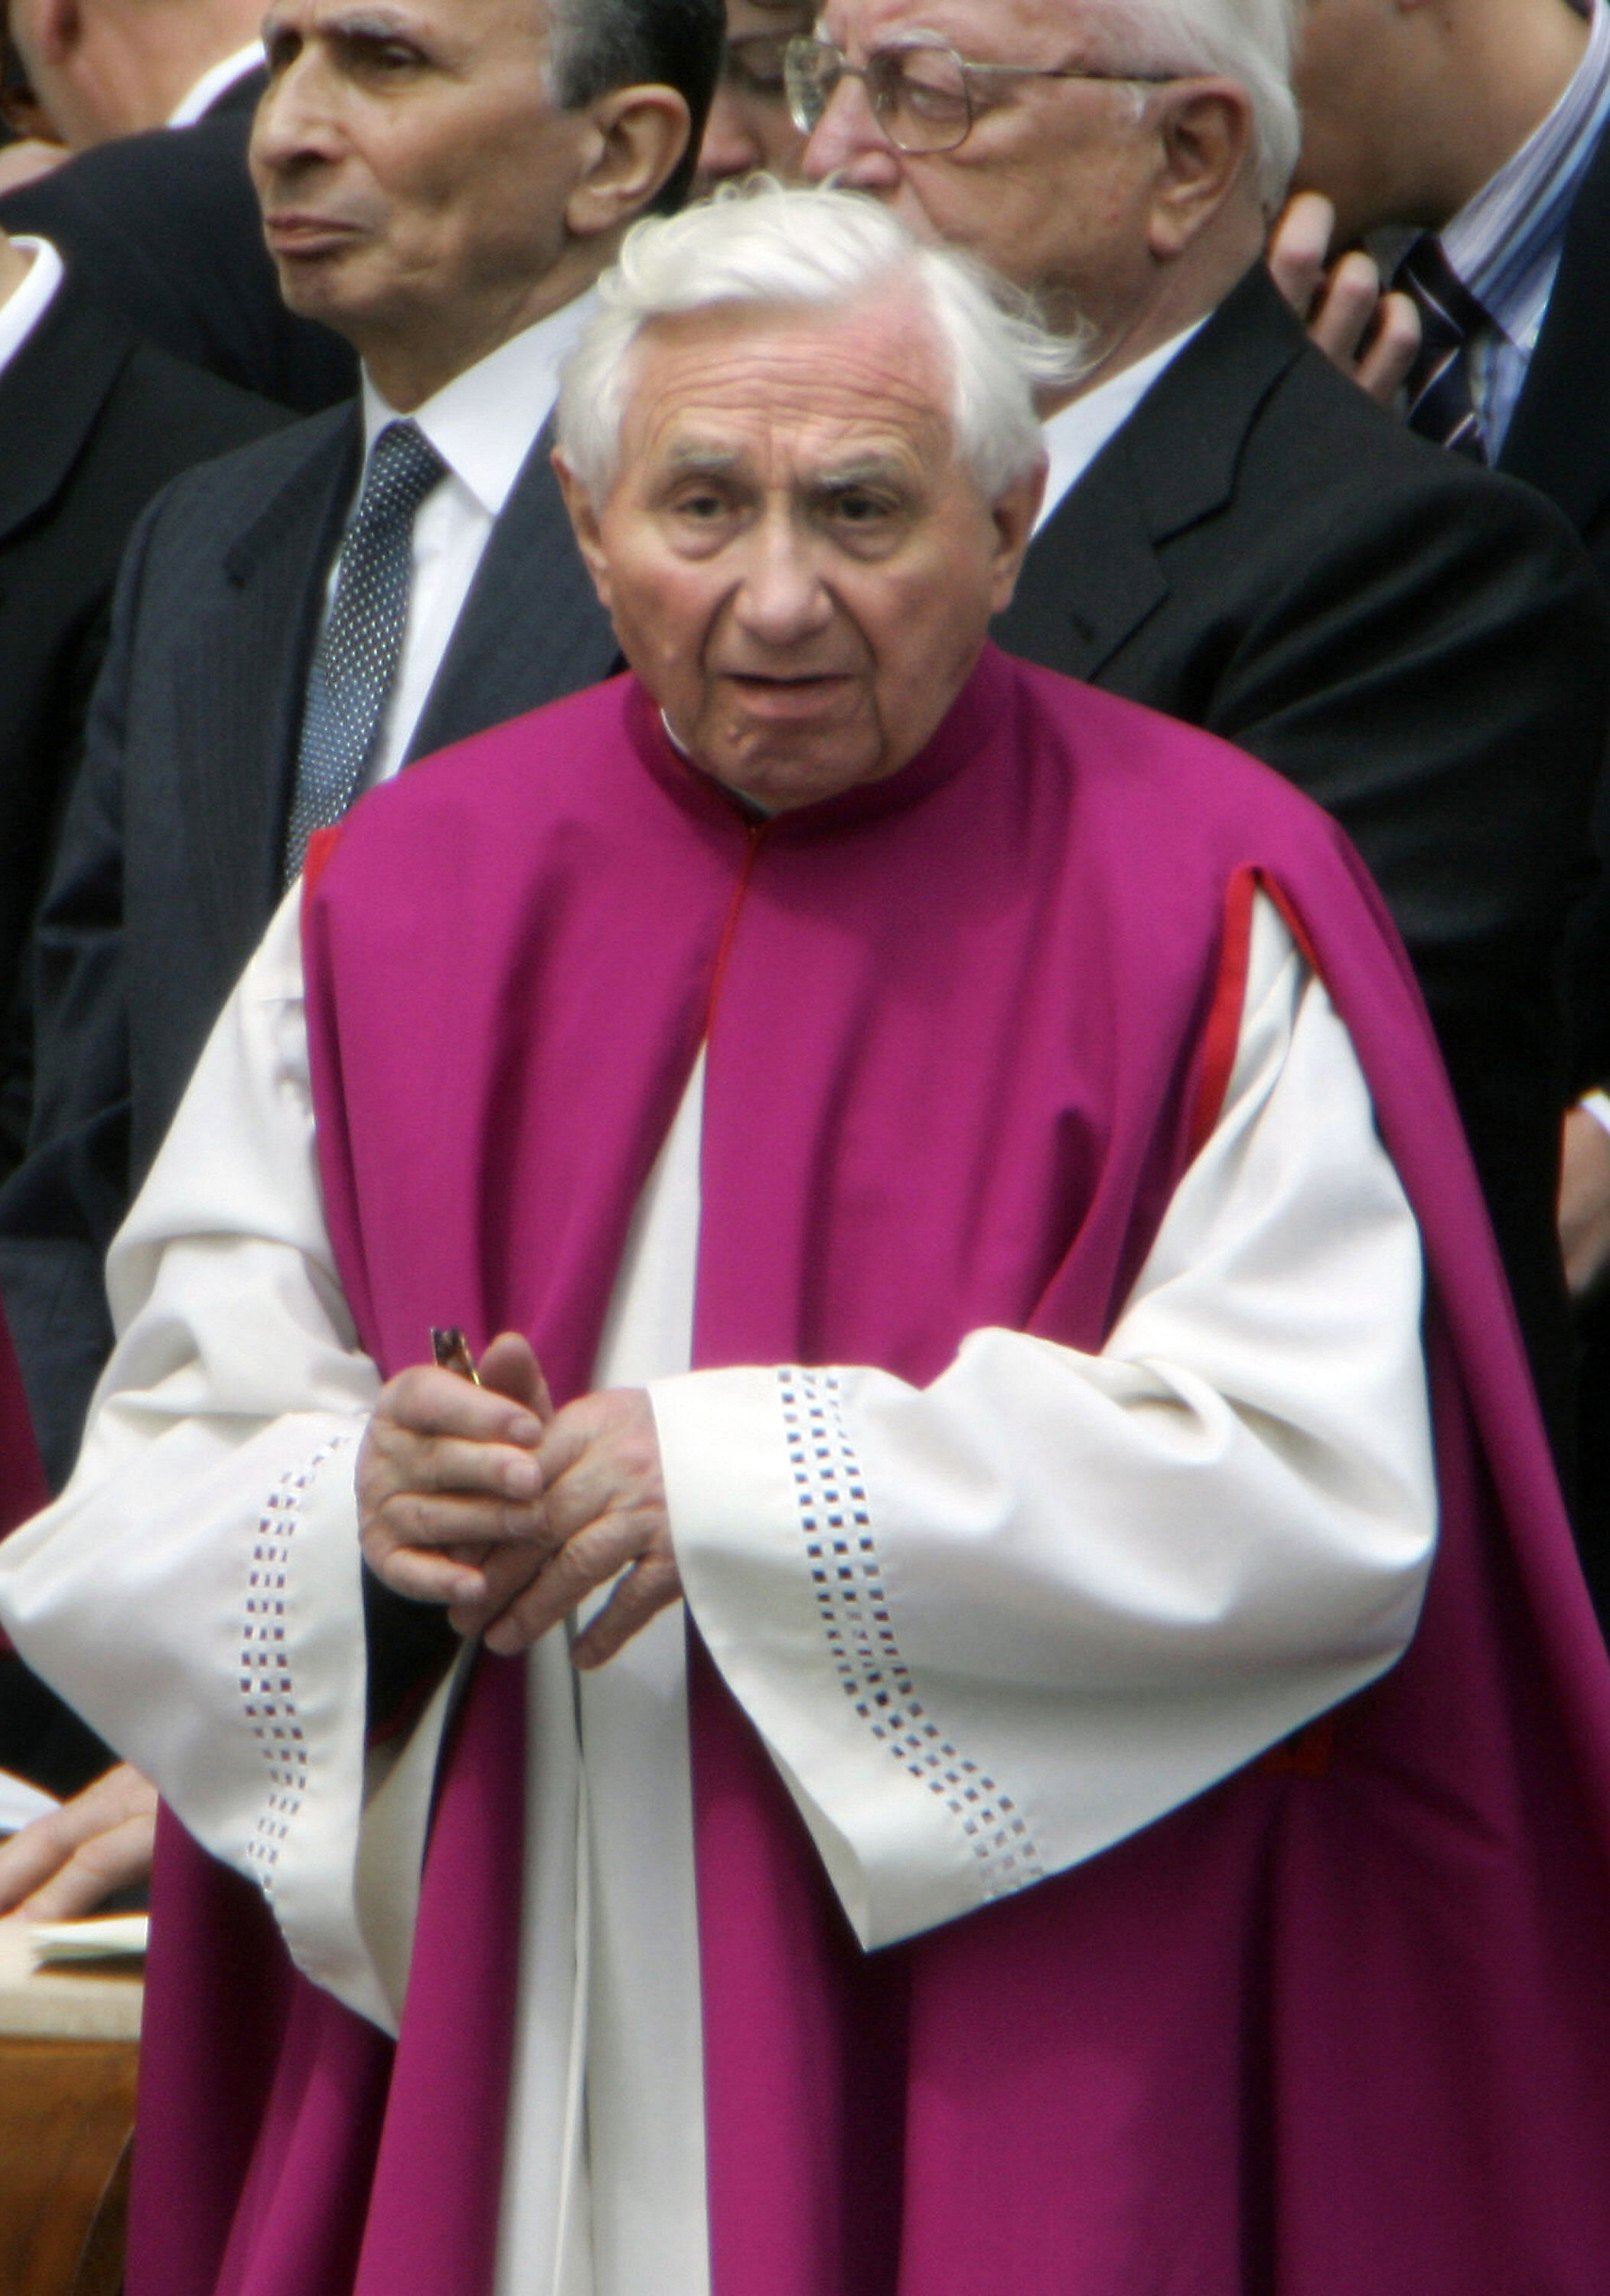 Georg Ratzinger, older brother of Pope Benedict XVI (AFP Photo)